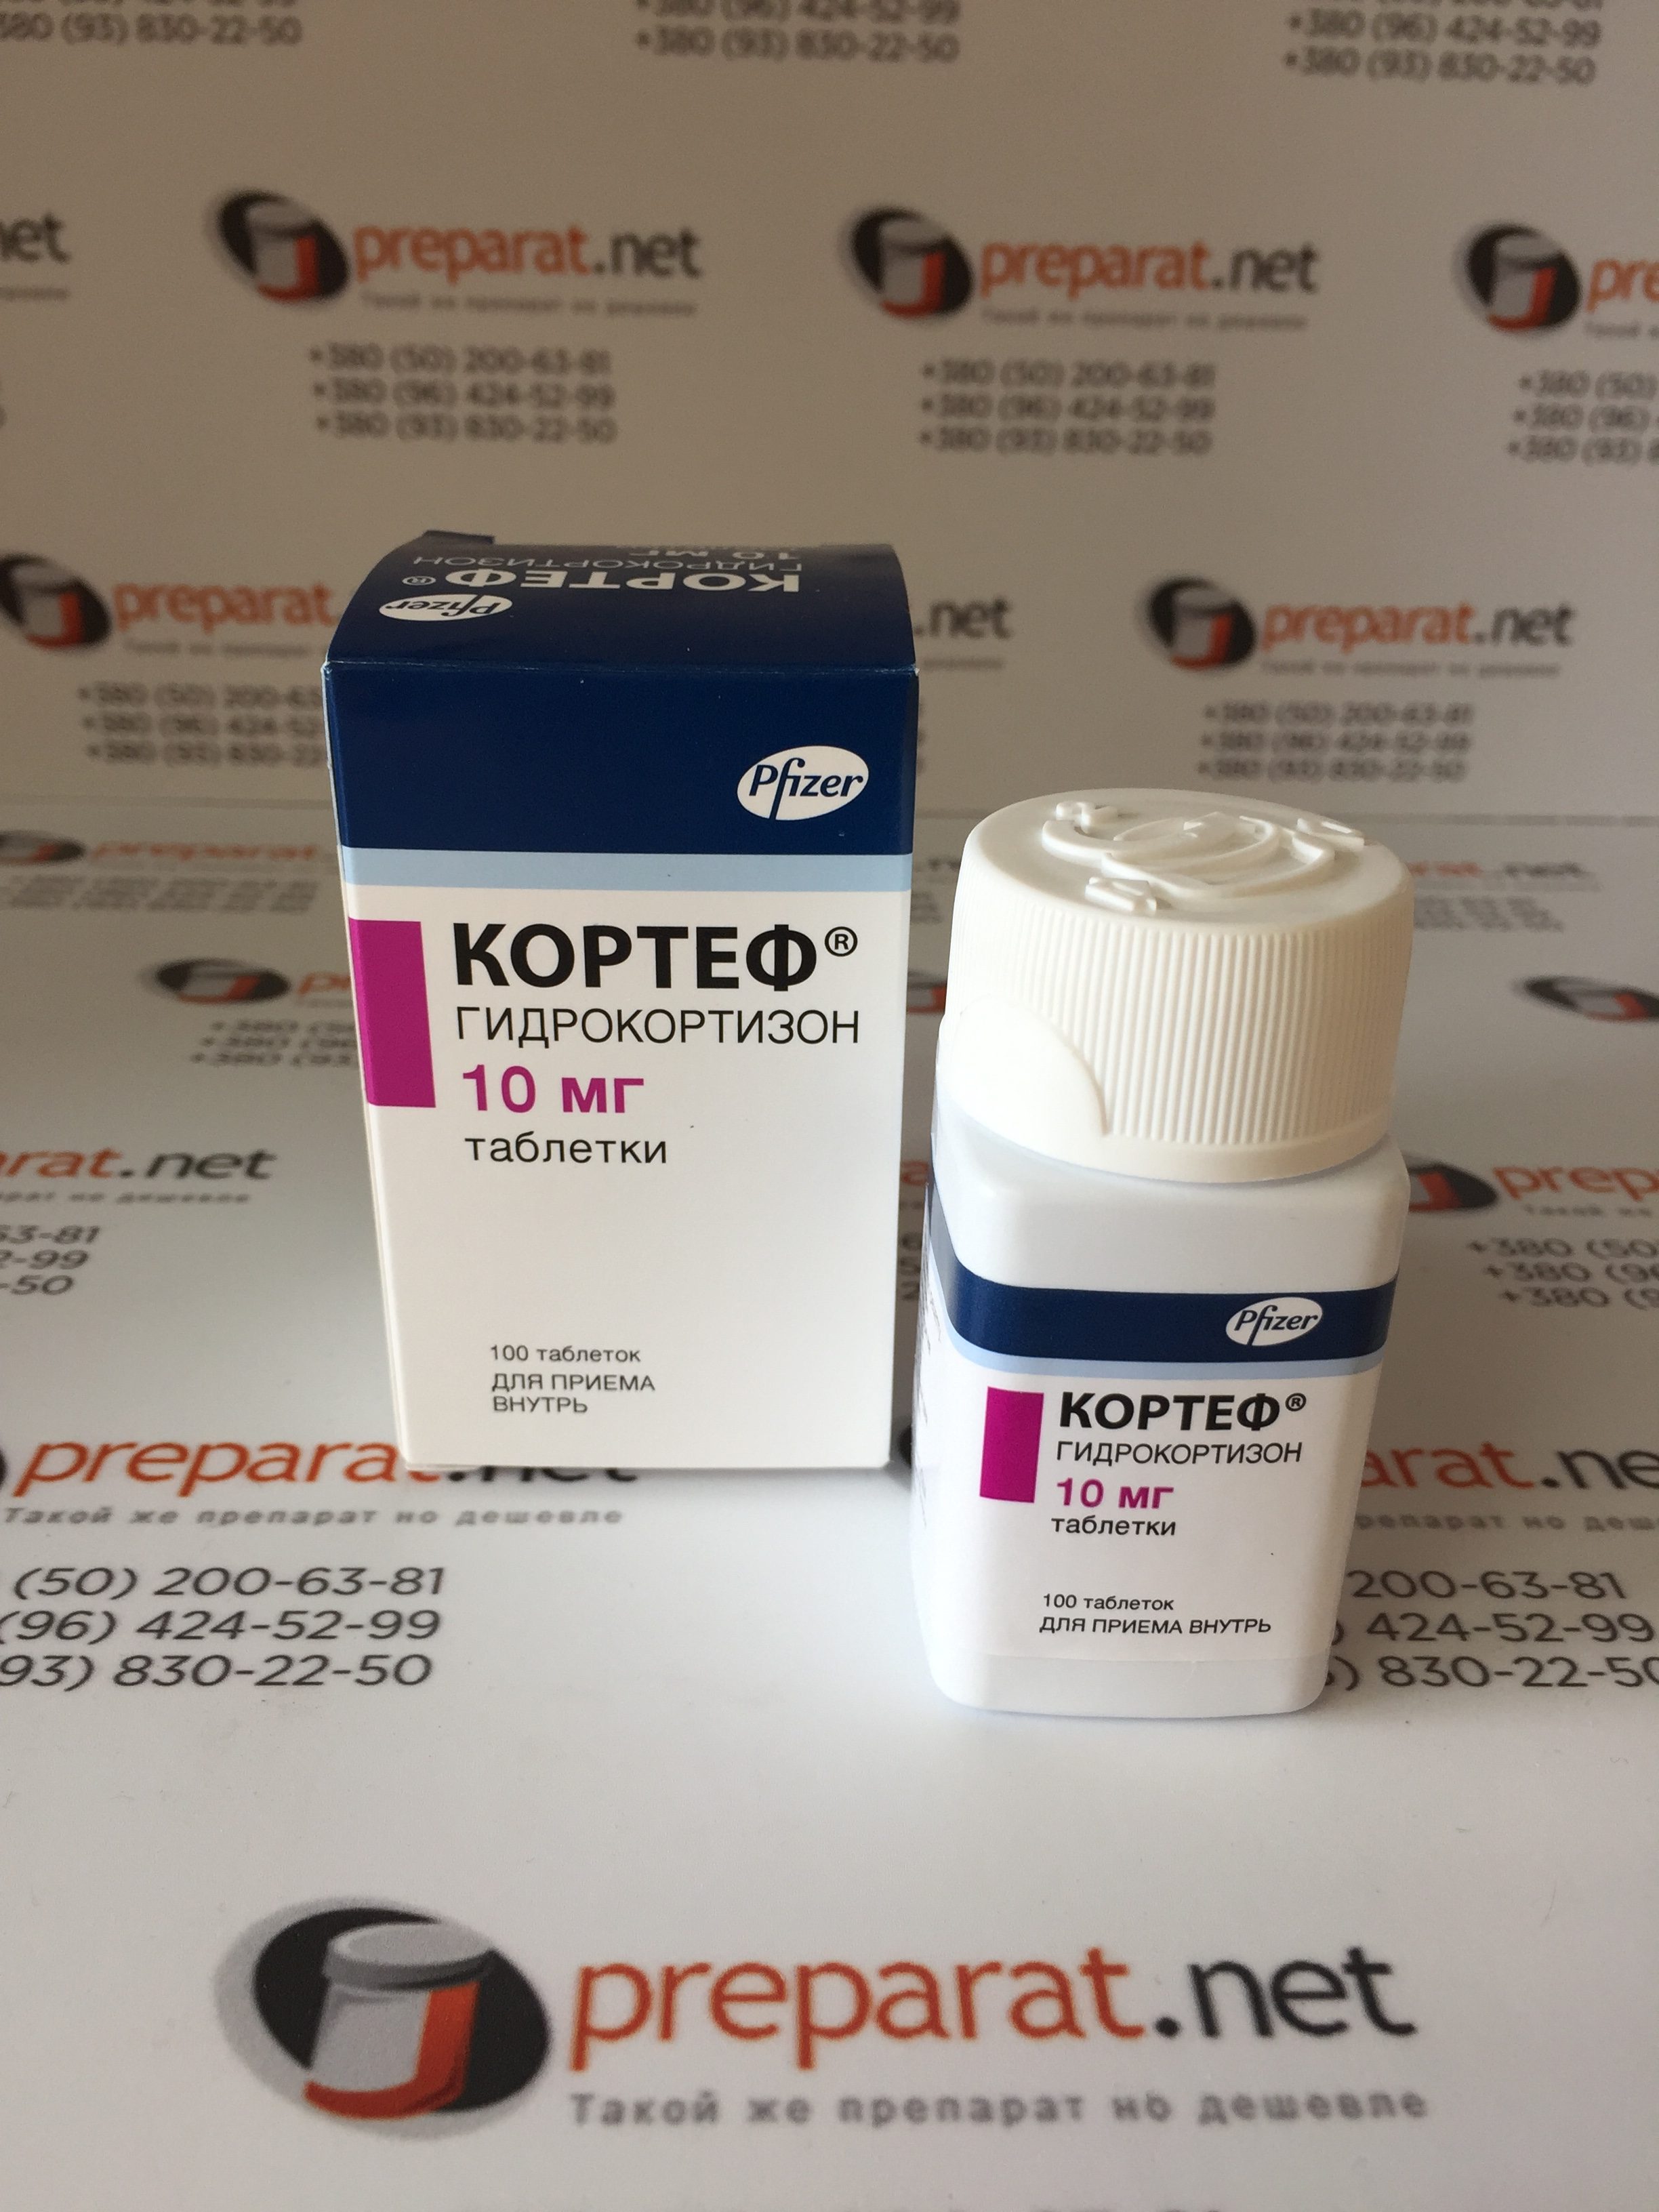 Кортеф 10 мг таблетки №100 — Preparat.net (Препарат.нет)